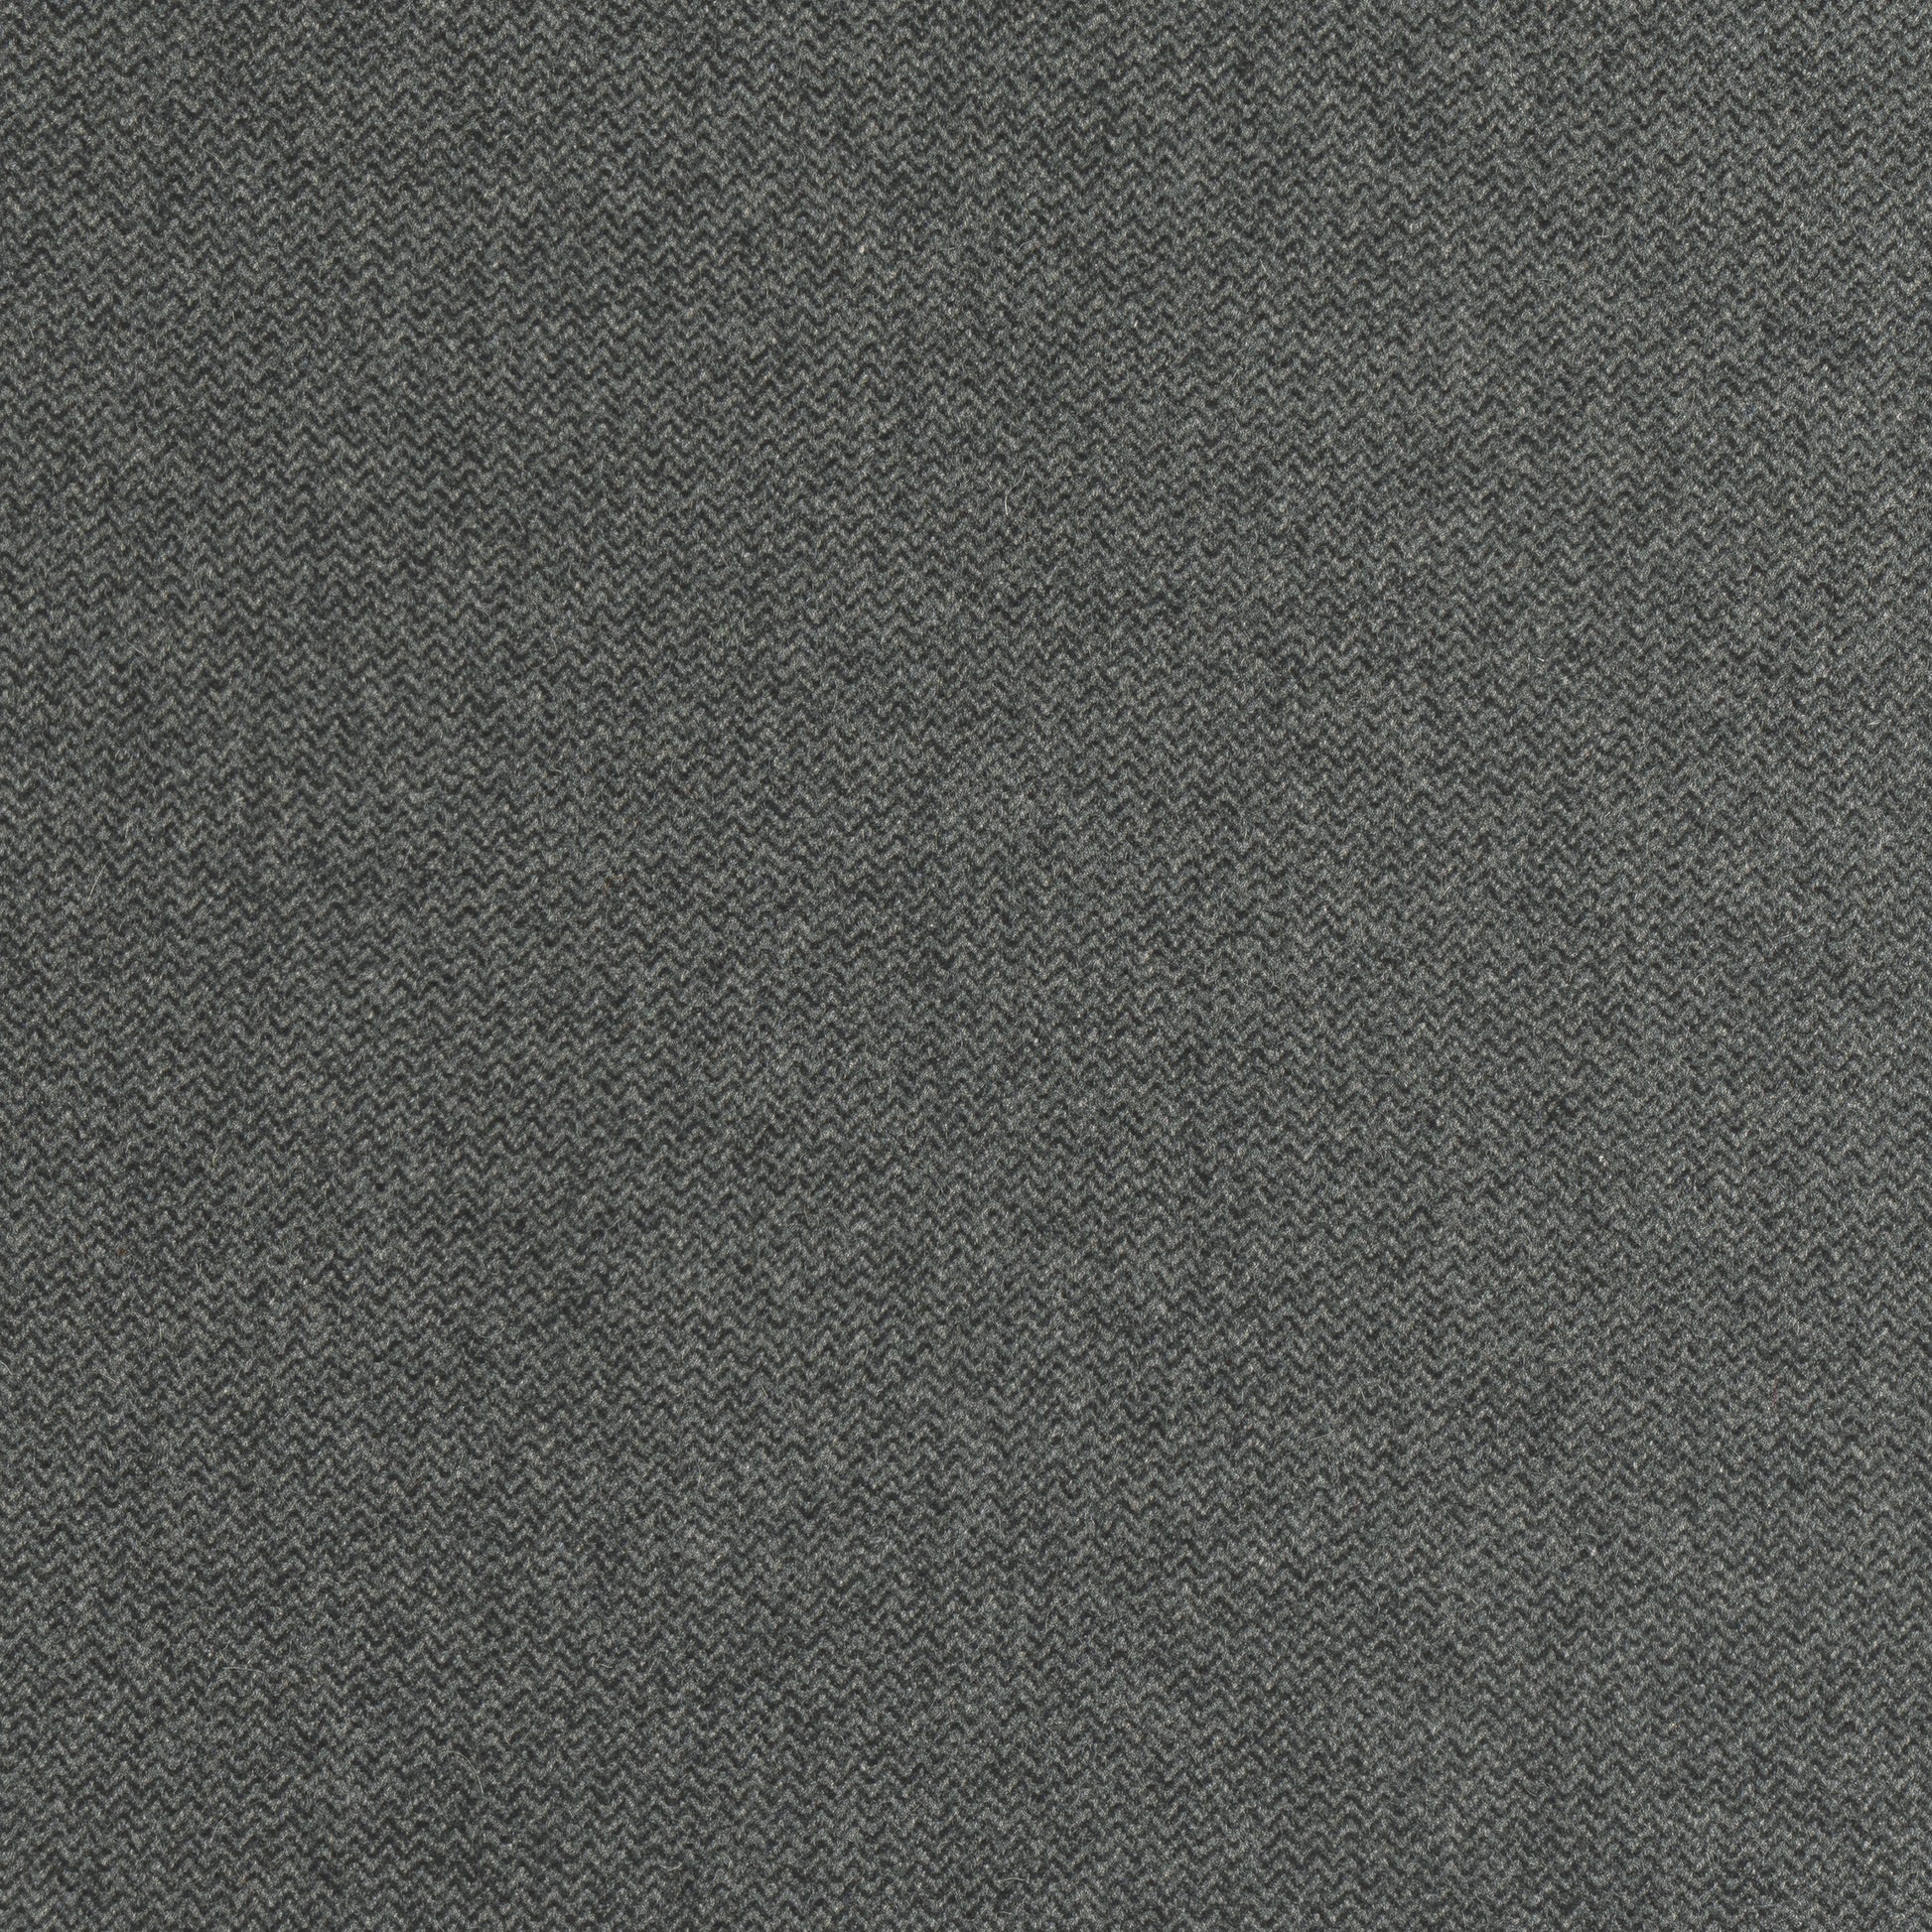 Purchase Thibaut Fabric Item# W80915 pattern name Dorset color Black